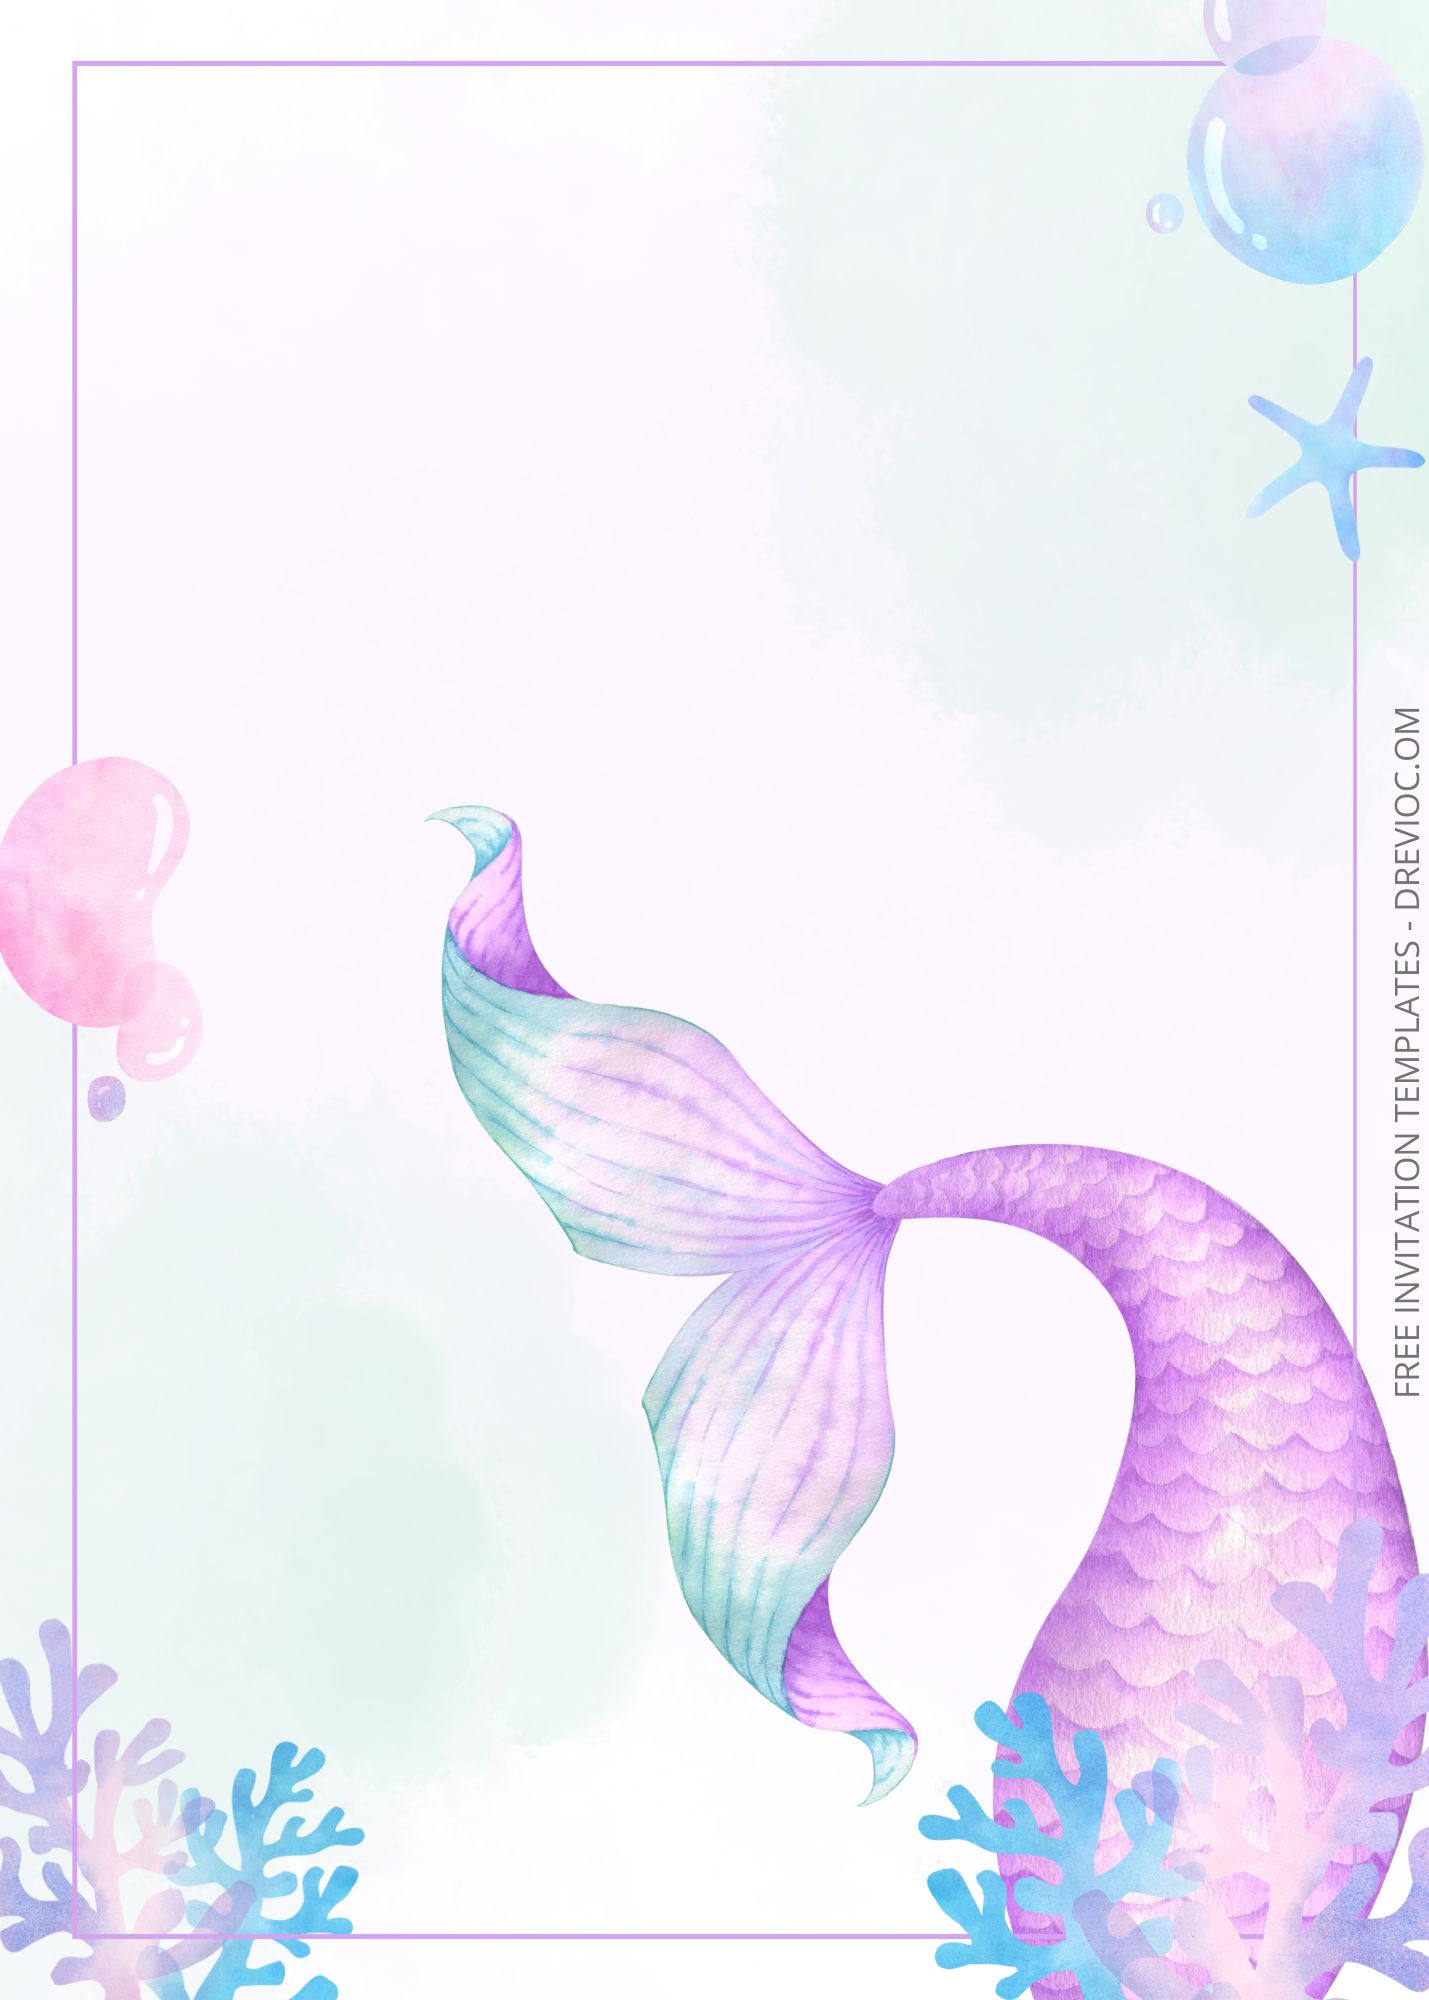 FREE Mermaid Tail Birthday Invitation Templates